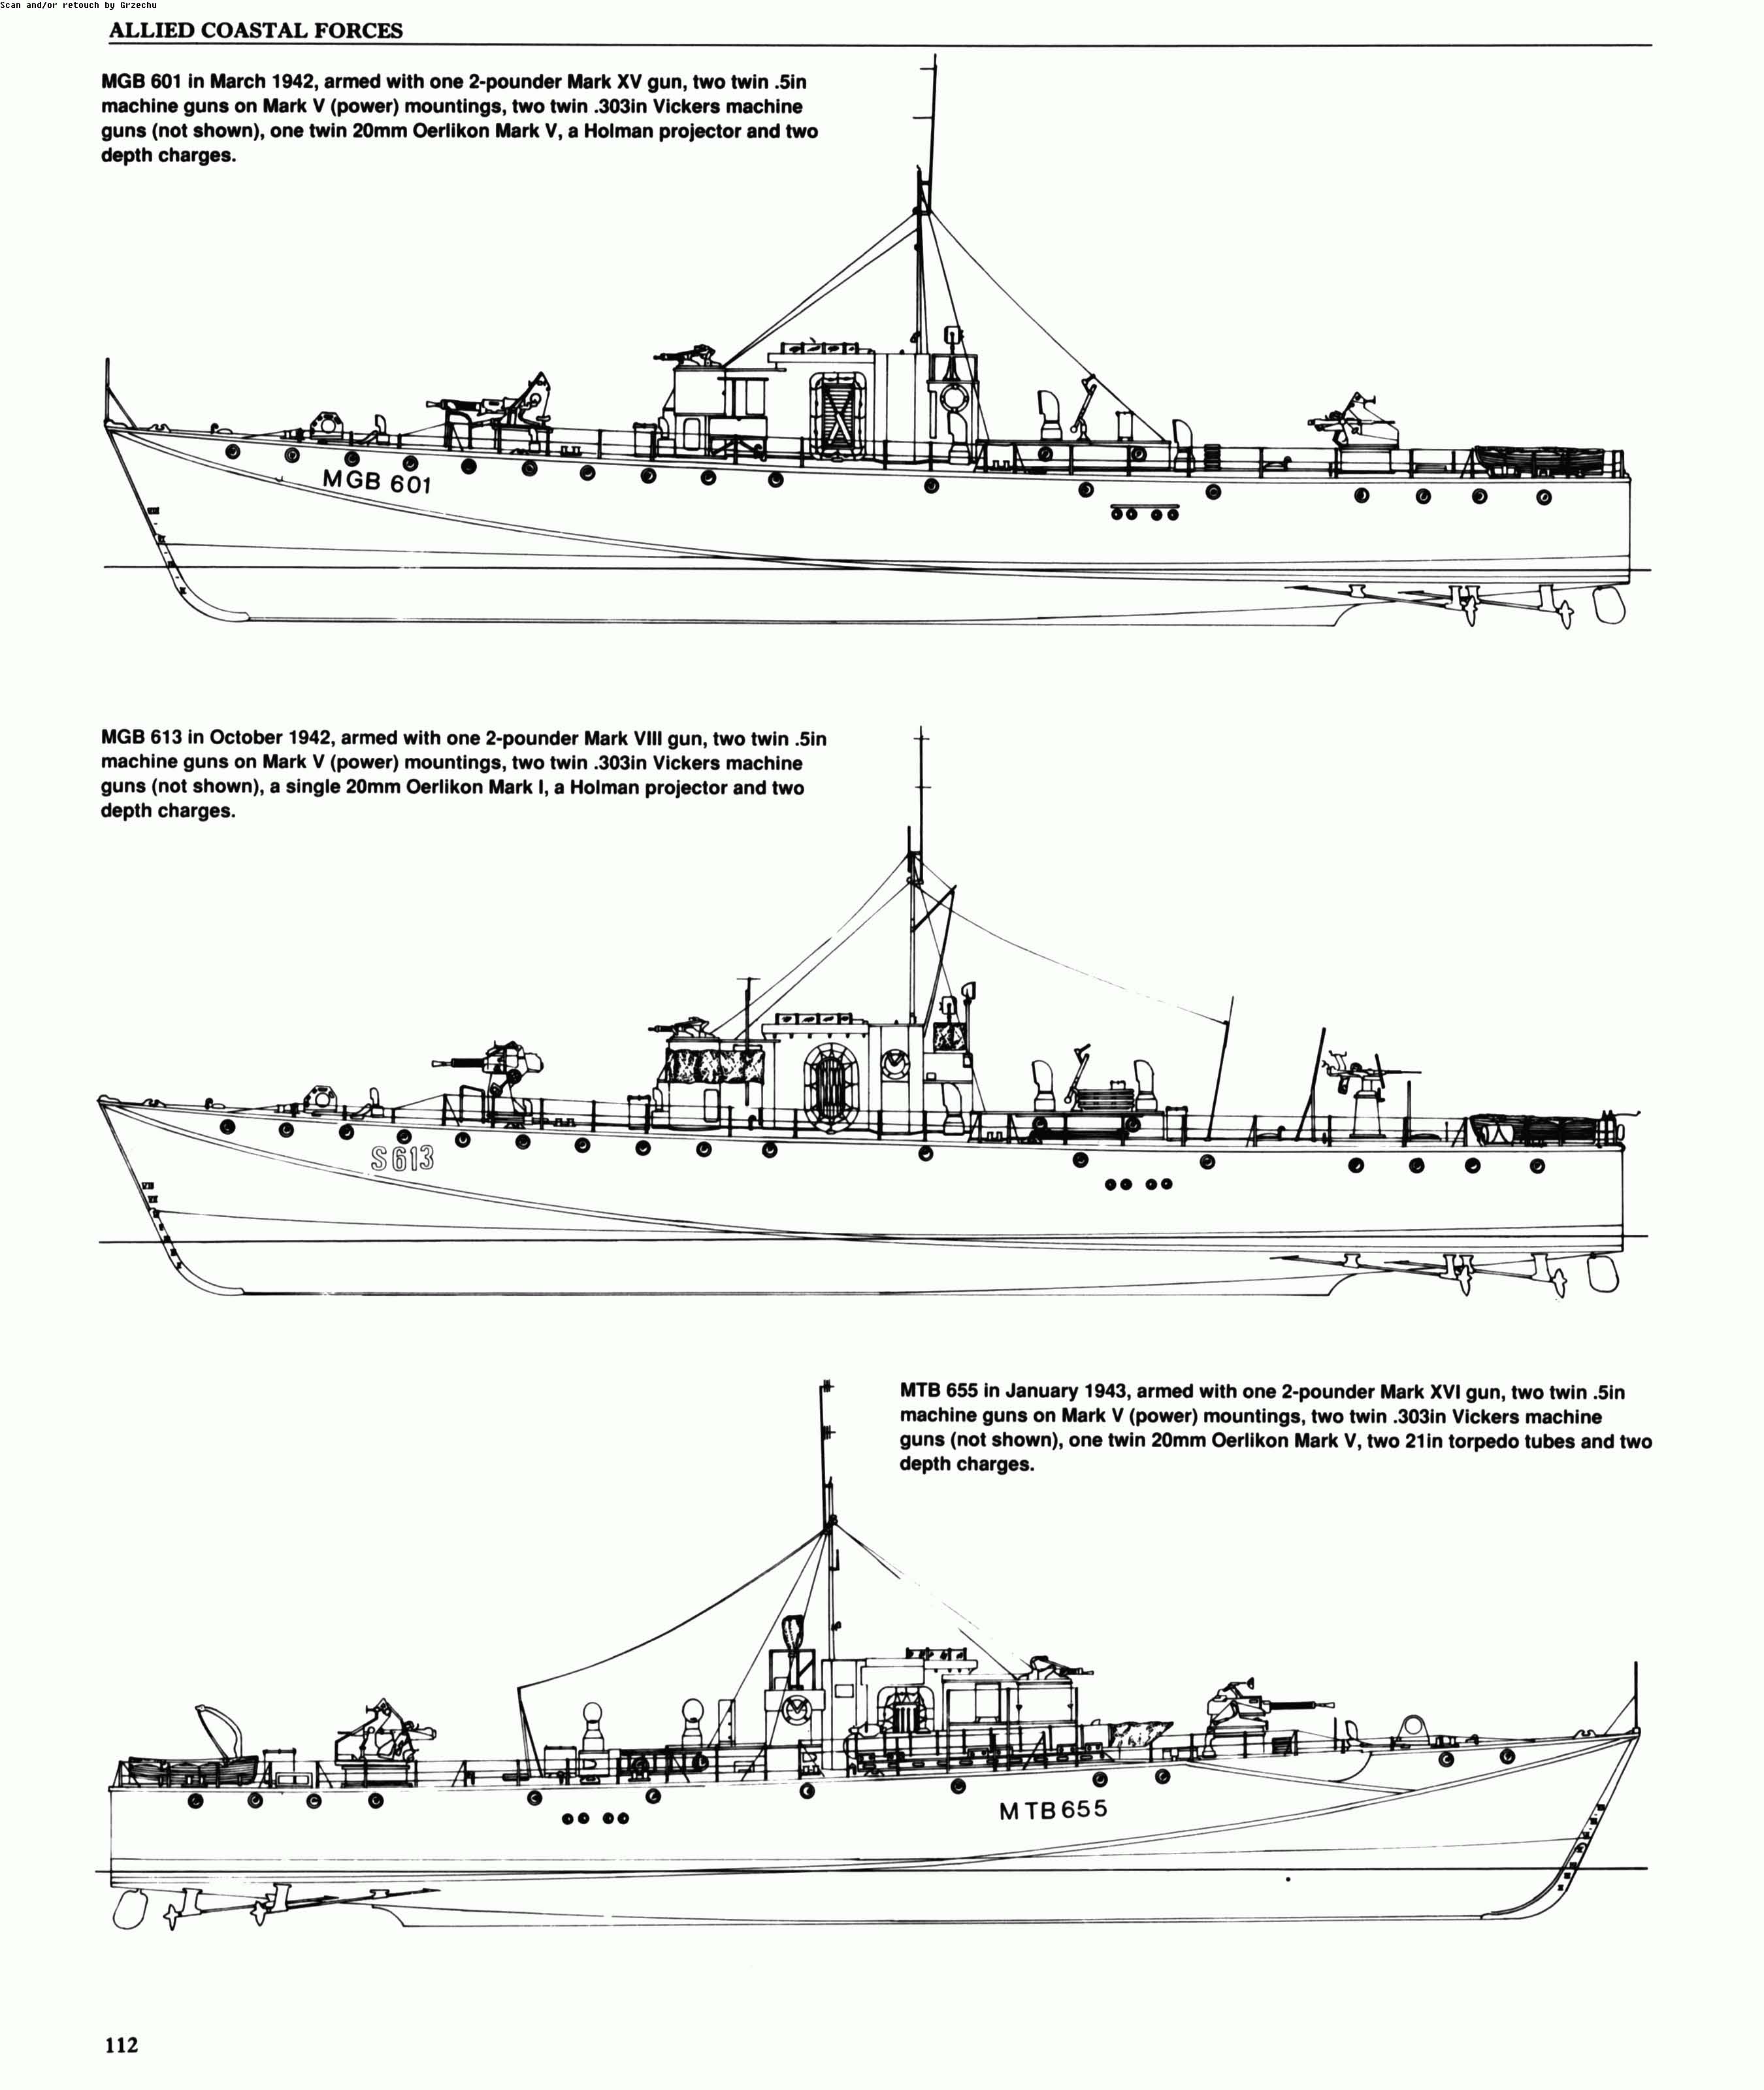 Allied Coastal Forces of World War II (1) Fairmile designs & U.S. submarine chasers_Page_114.jpg